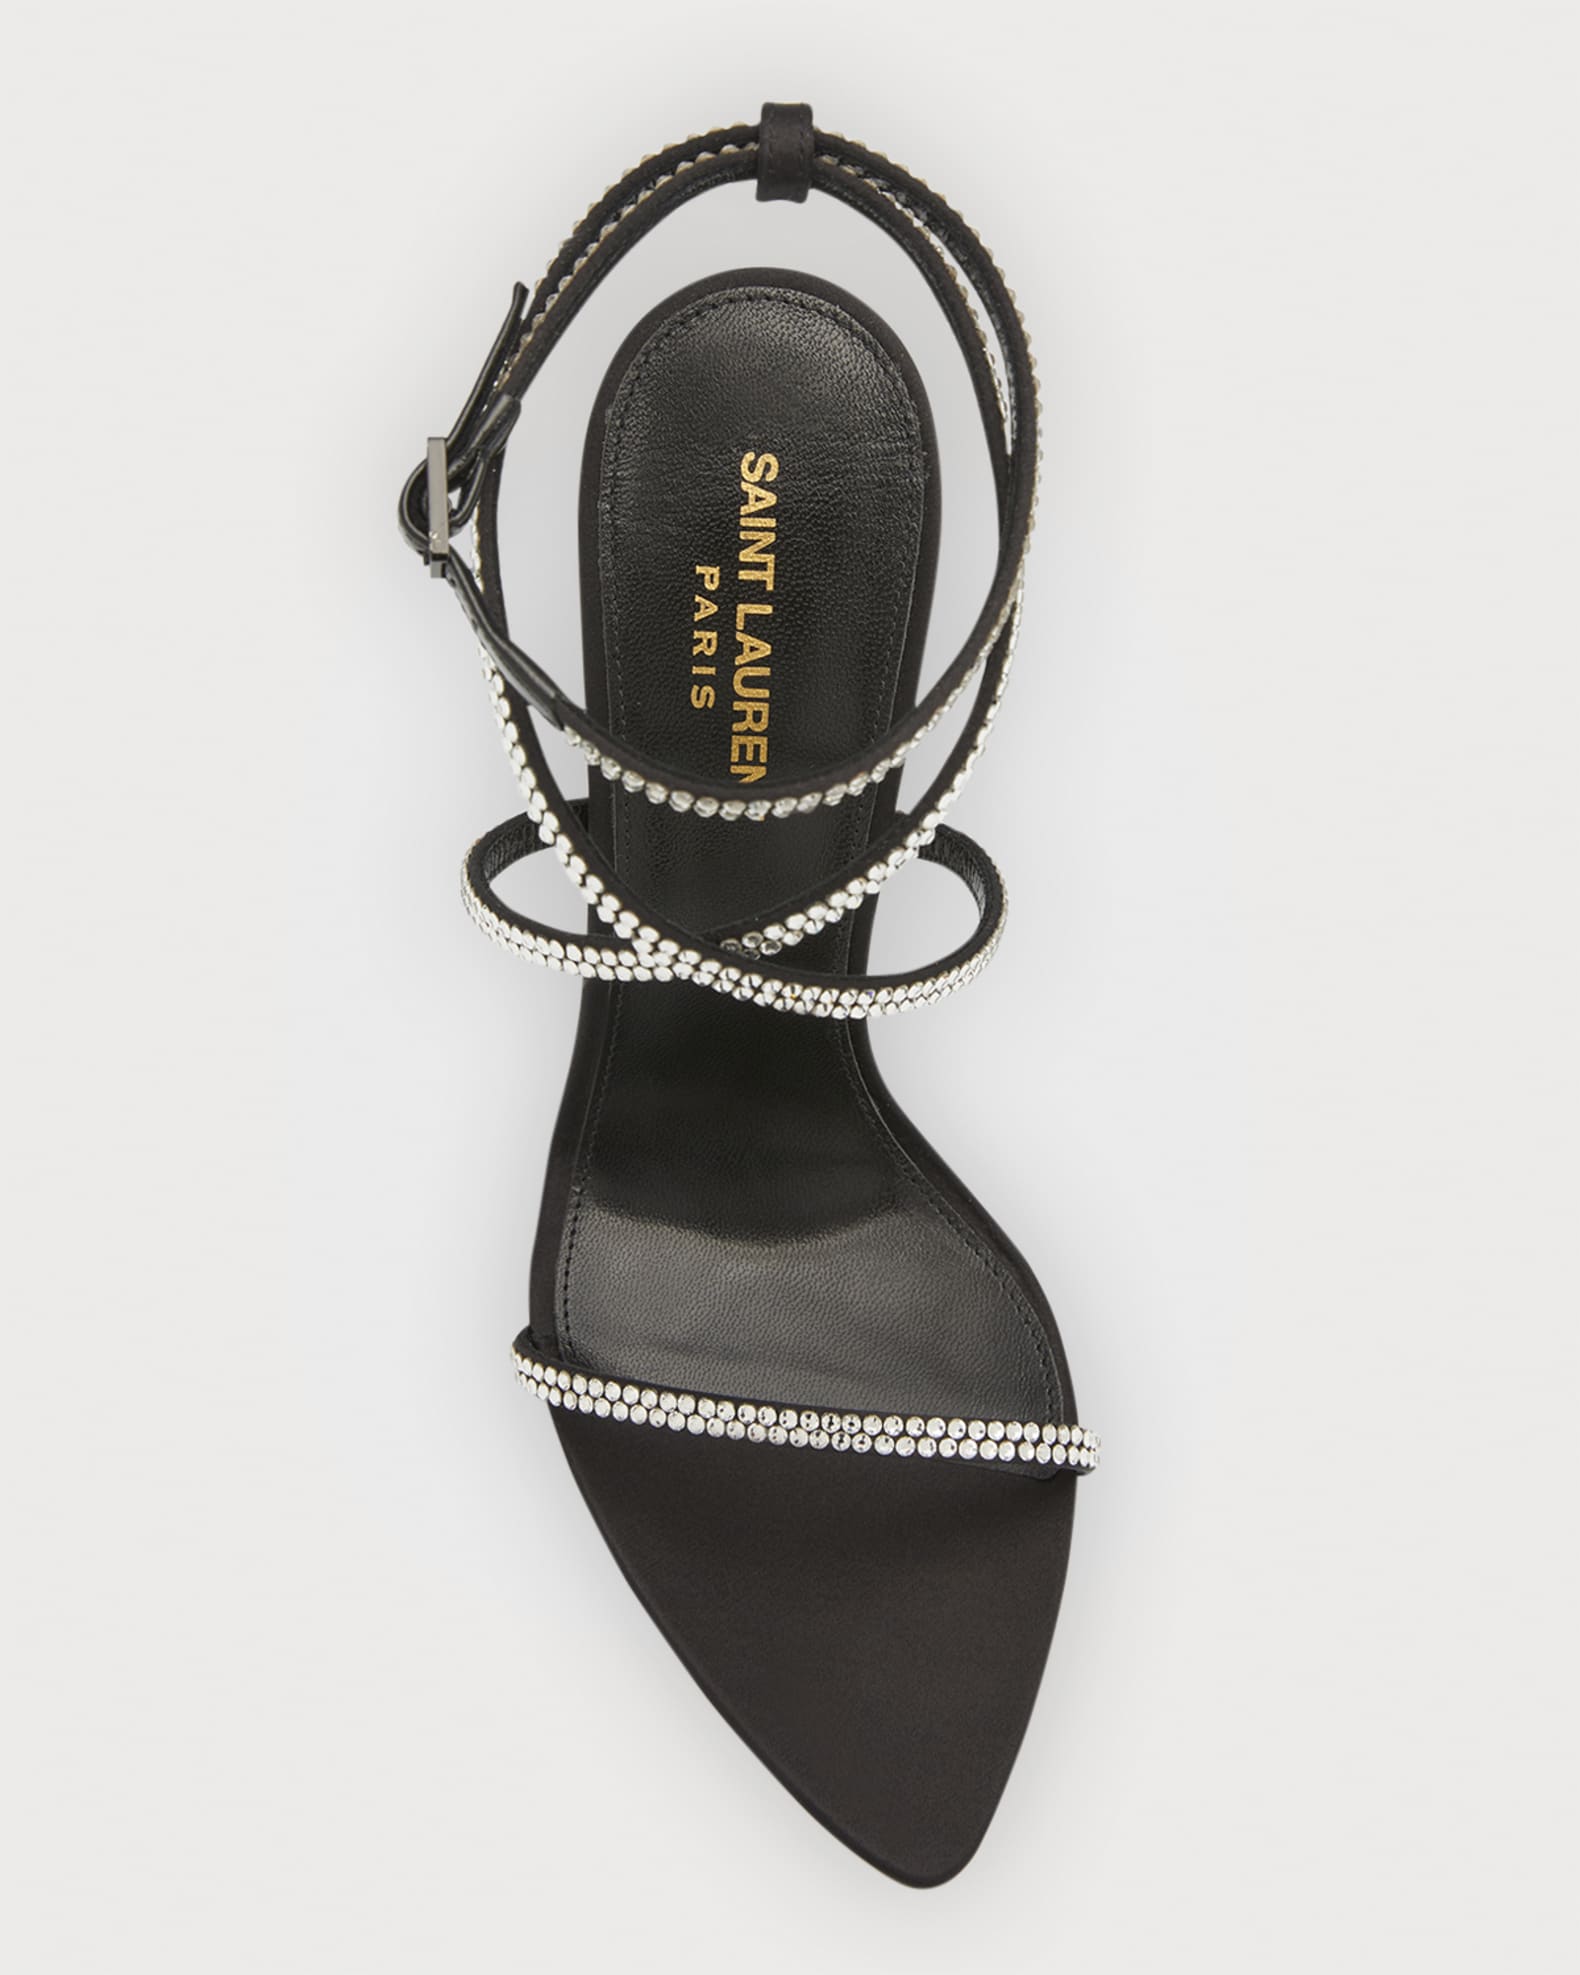 Saint Laurent Gippy Crystal Ankle-Strap Sandals | Neiman Marcus